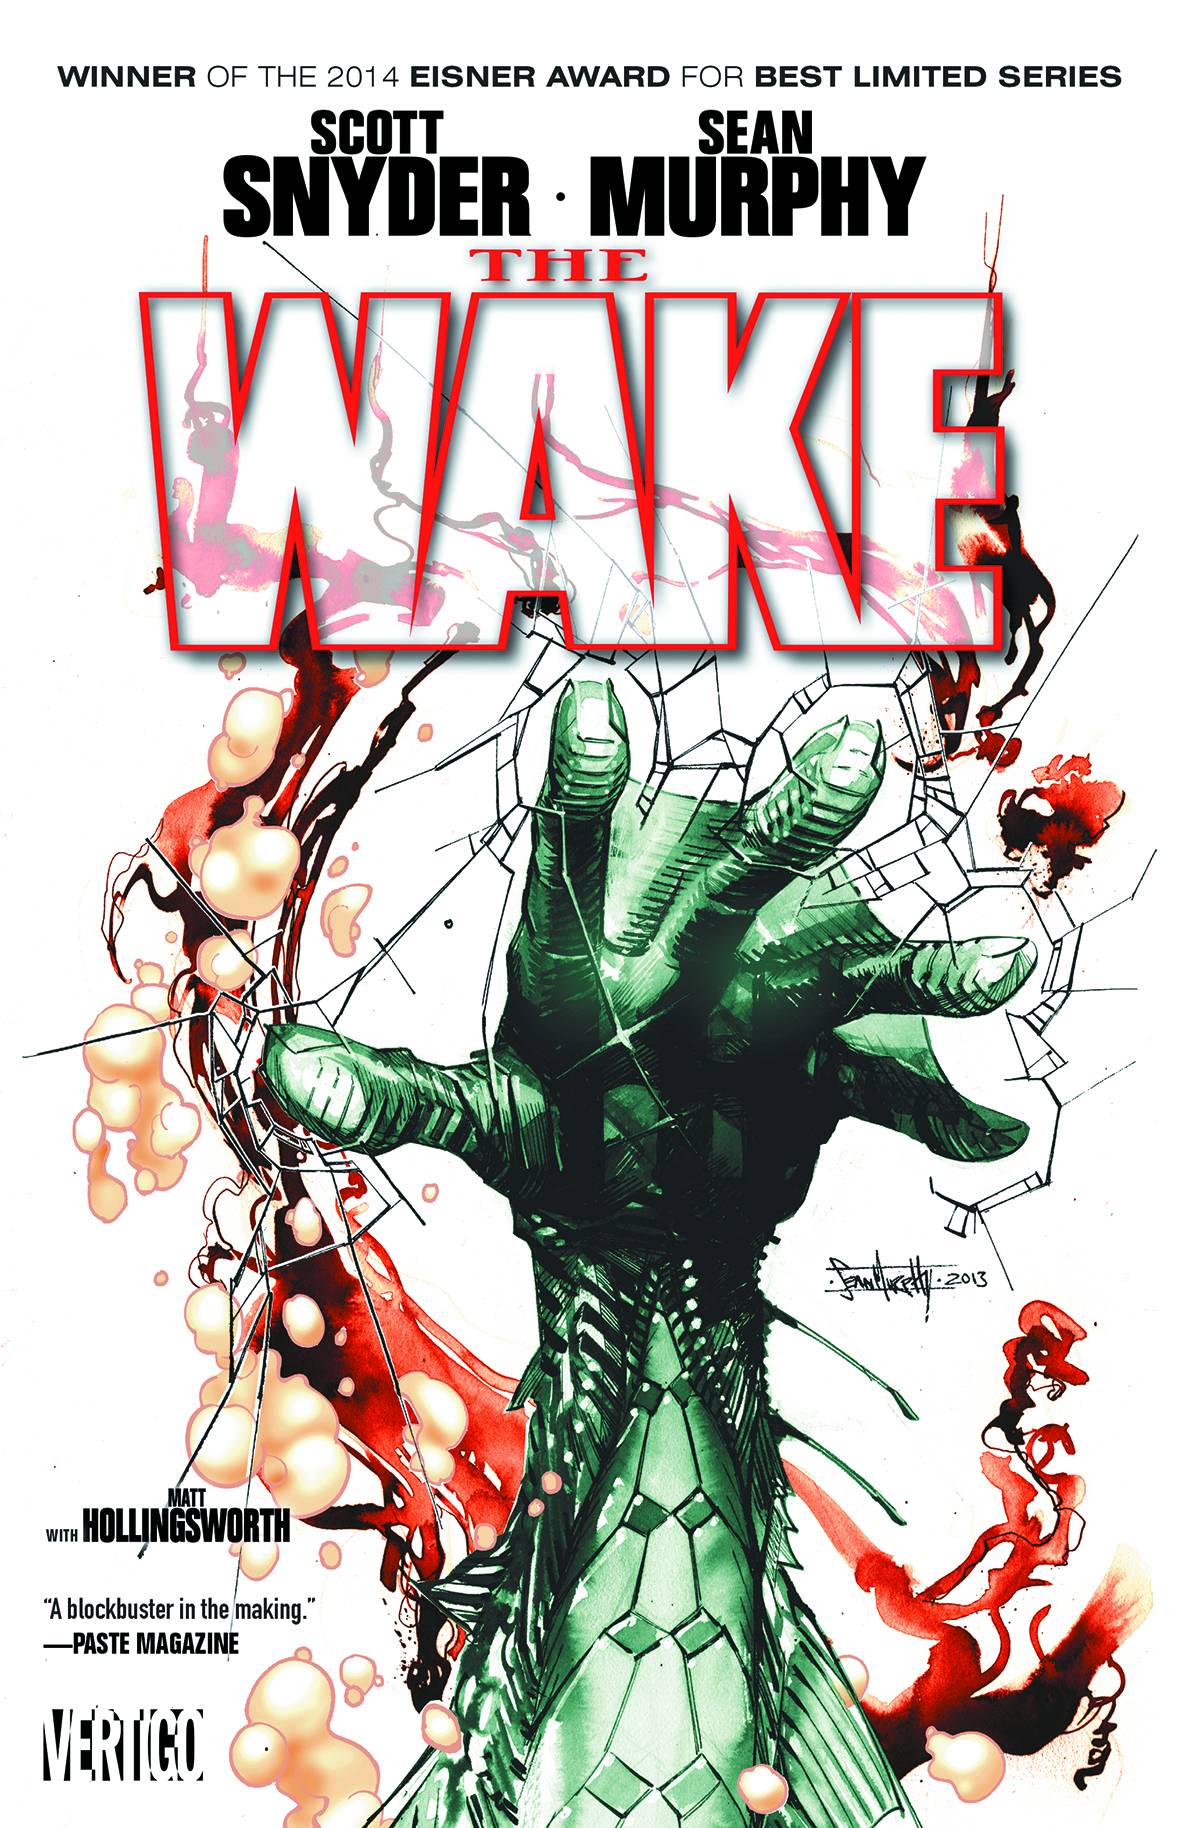 Wake Graphic Novel